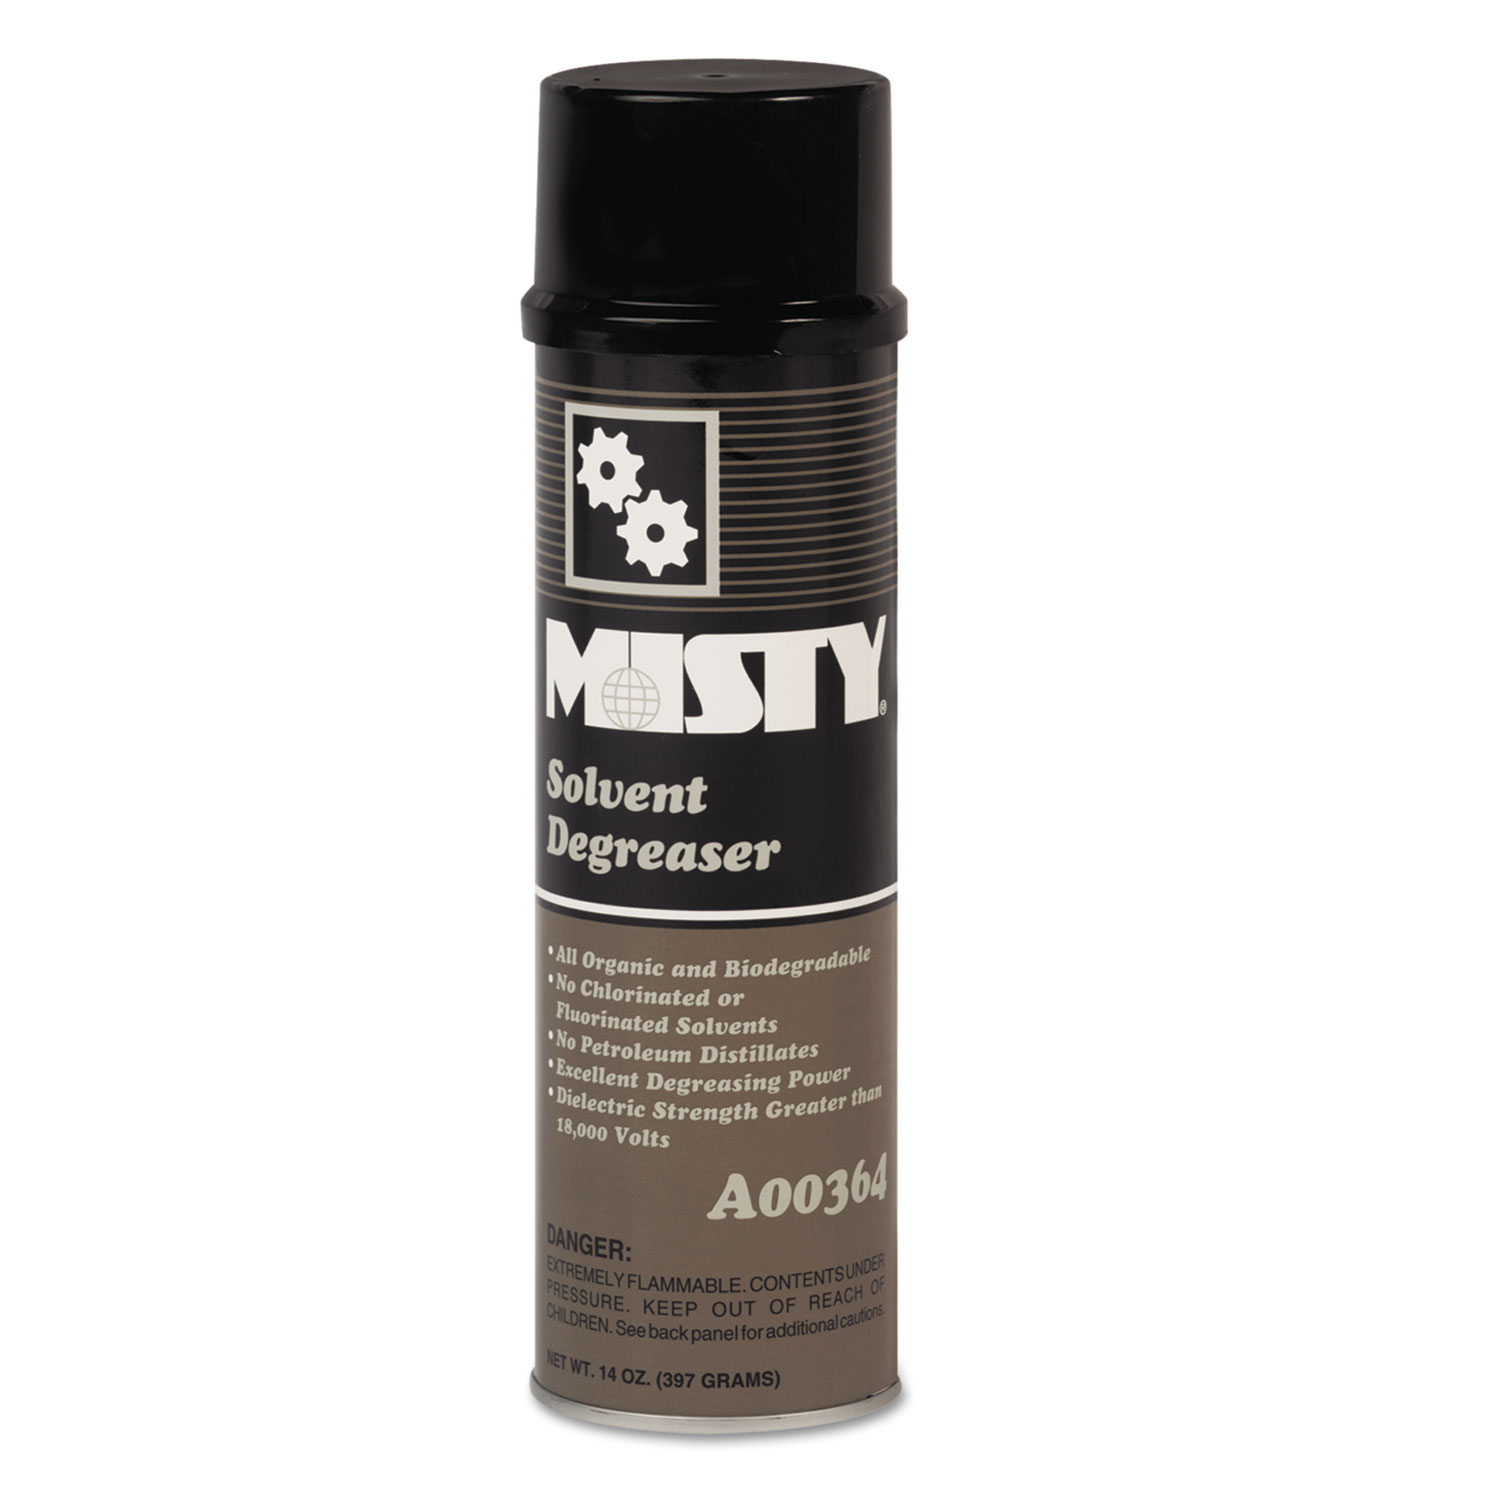  Misty 1033954 Solvent Degreaser, 20 oz. Aerosol Can (AMR1033954) 